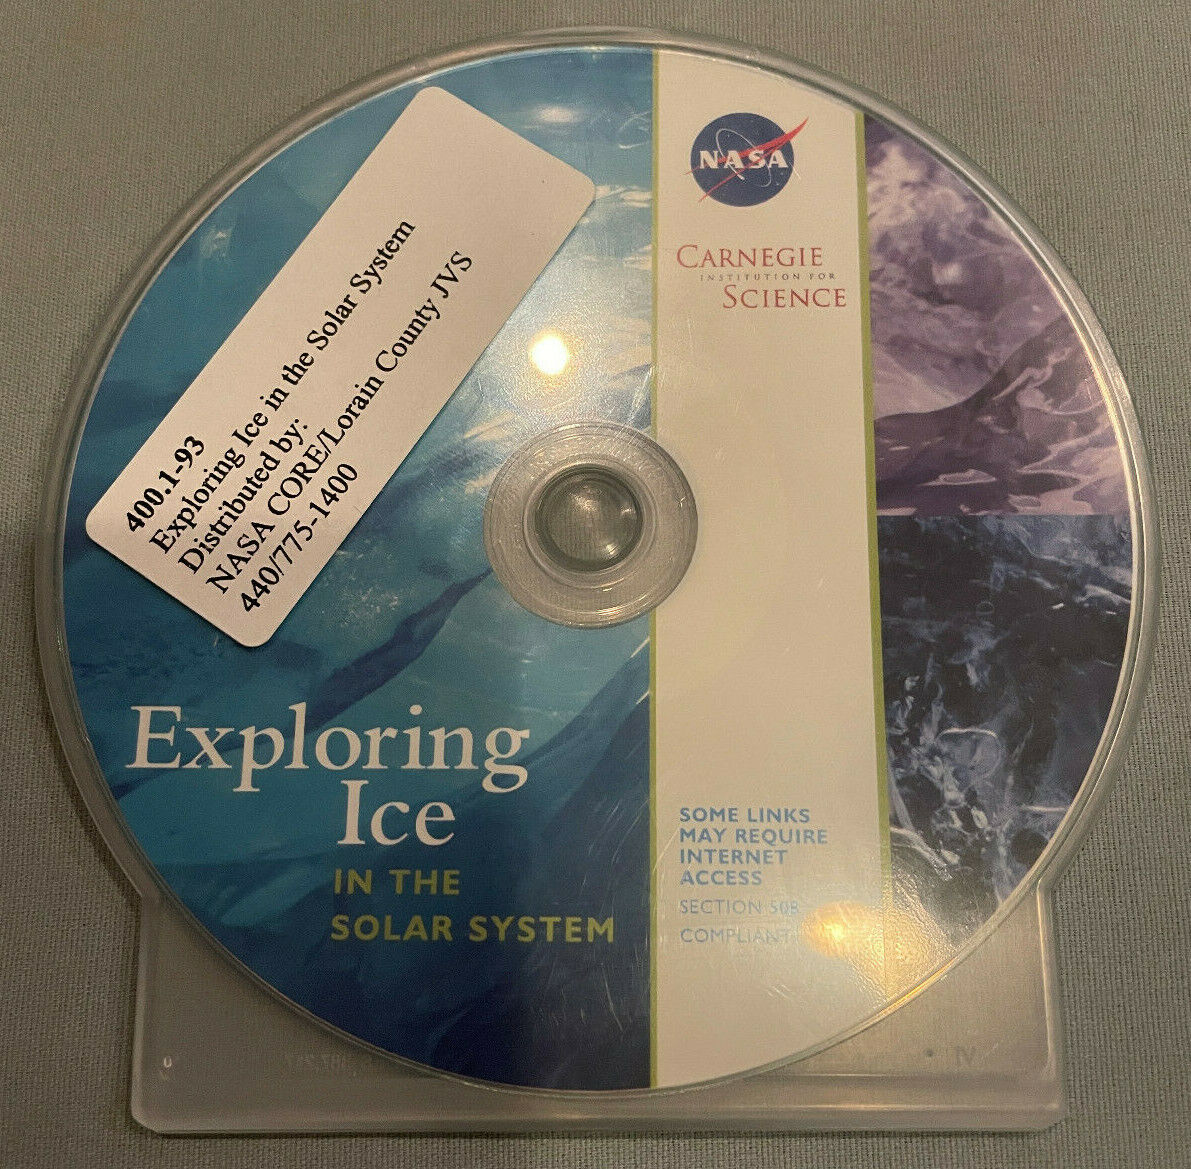 Exploring Ice in the Solar System - NASA/Carnegie Science Institution EPO PC CD